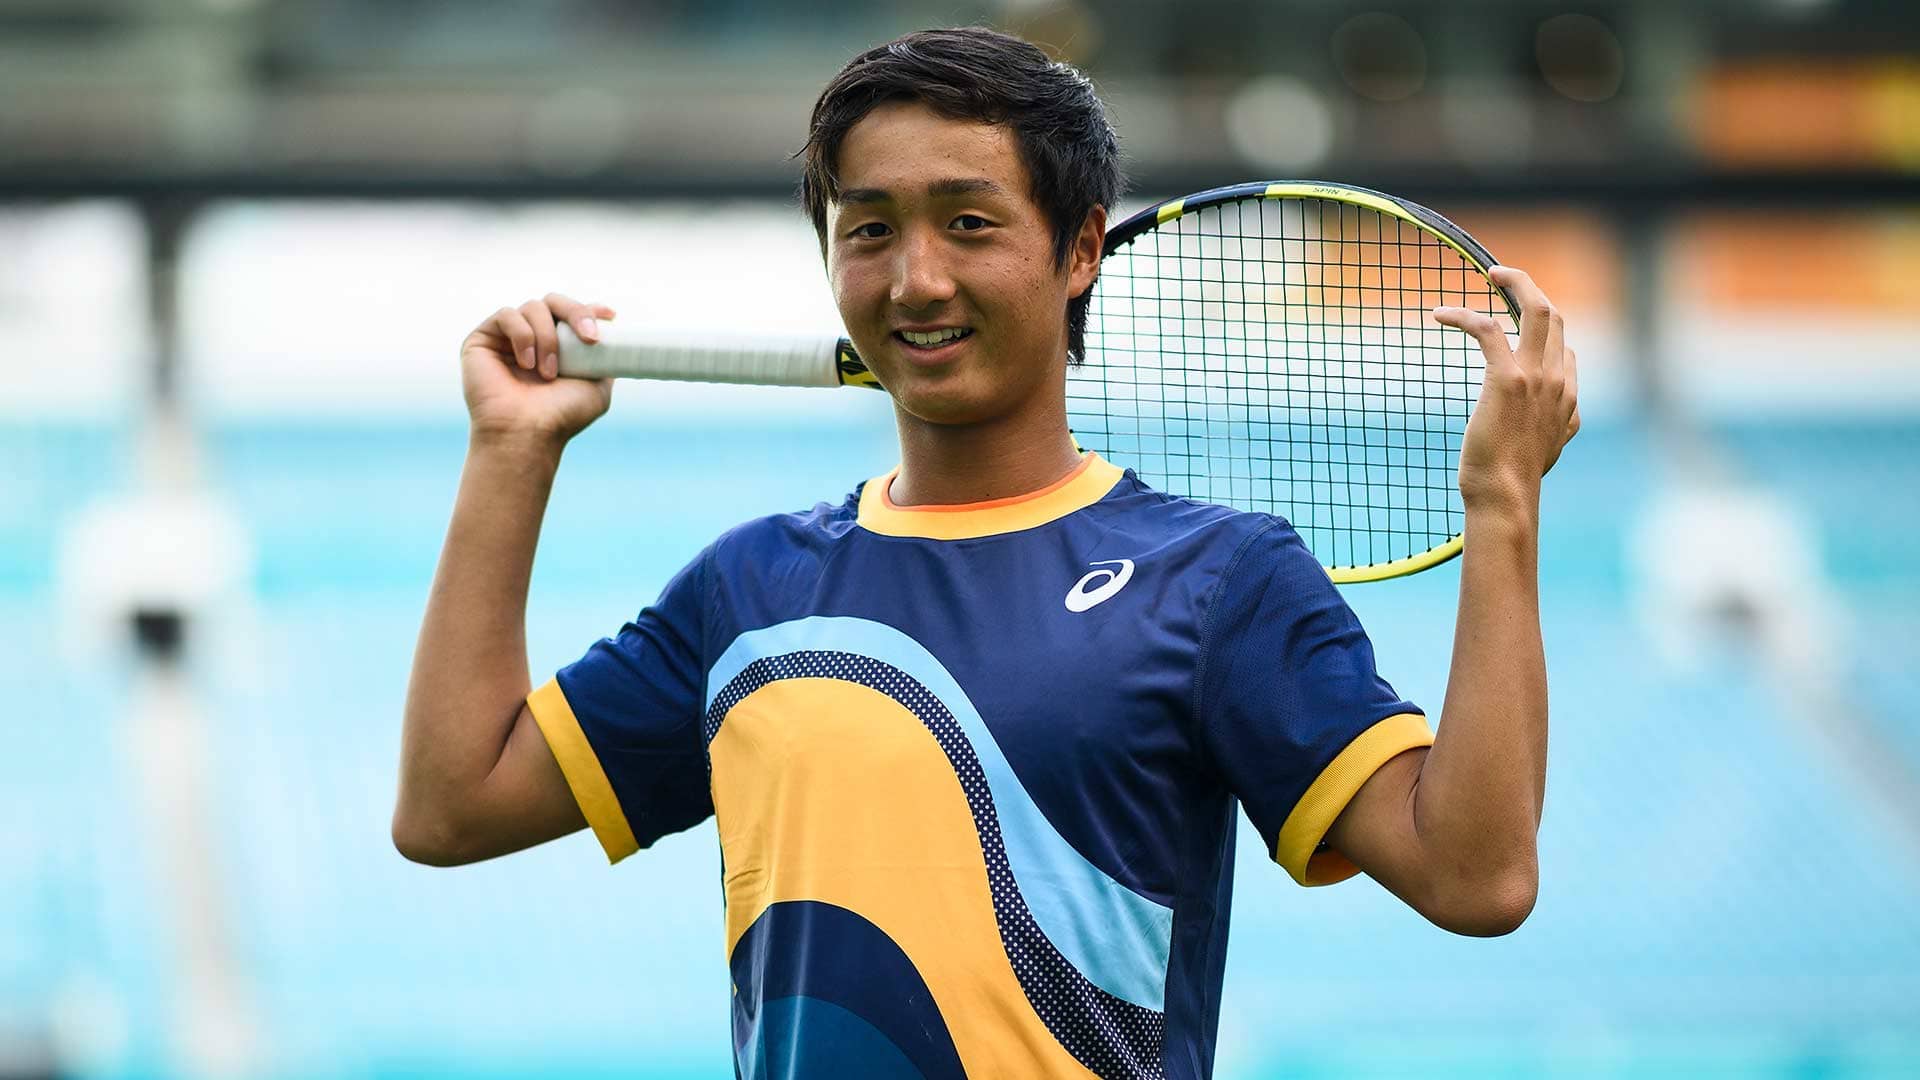 Former junior World No. 1, 17-year-old Shintaro Mochizuki has qualified for his maiden ATP Masters 1000 main draw in Miami.